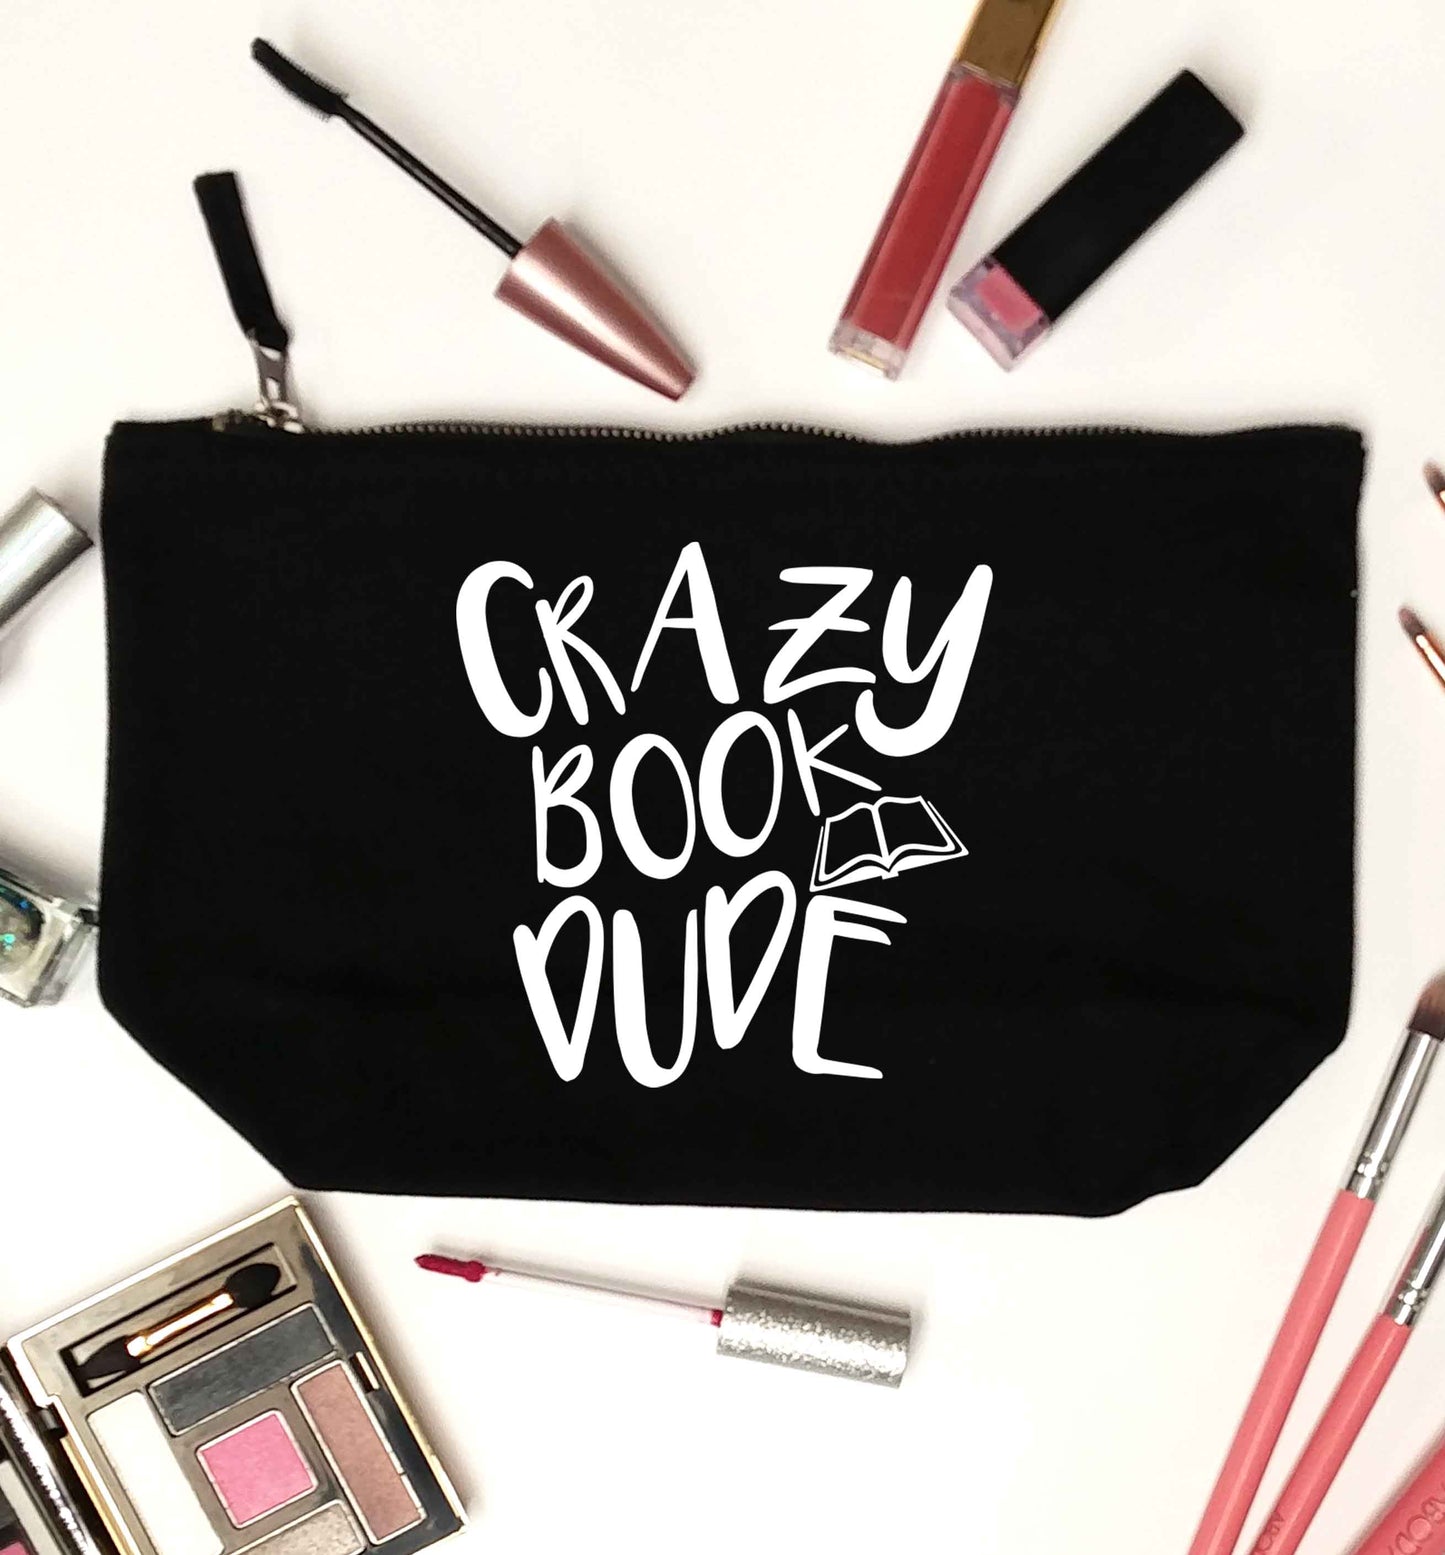 Crazy book dude black makeup bag